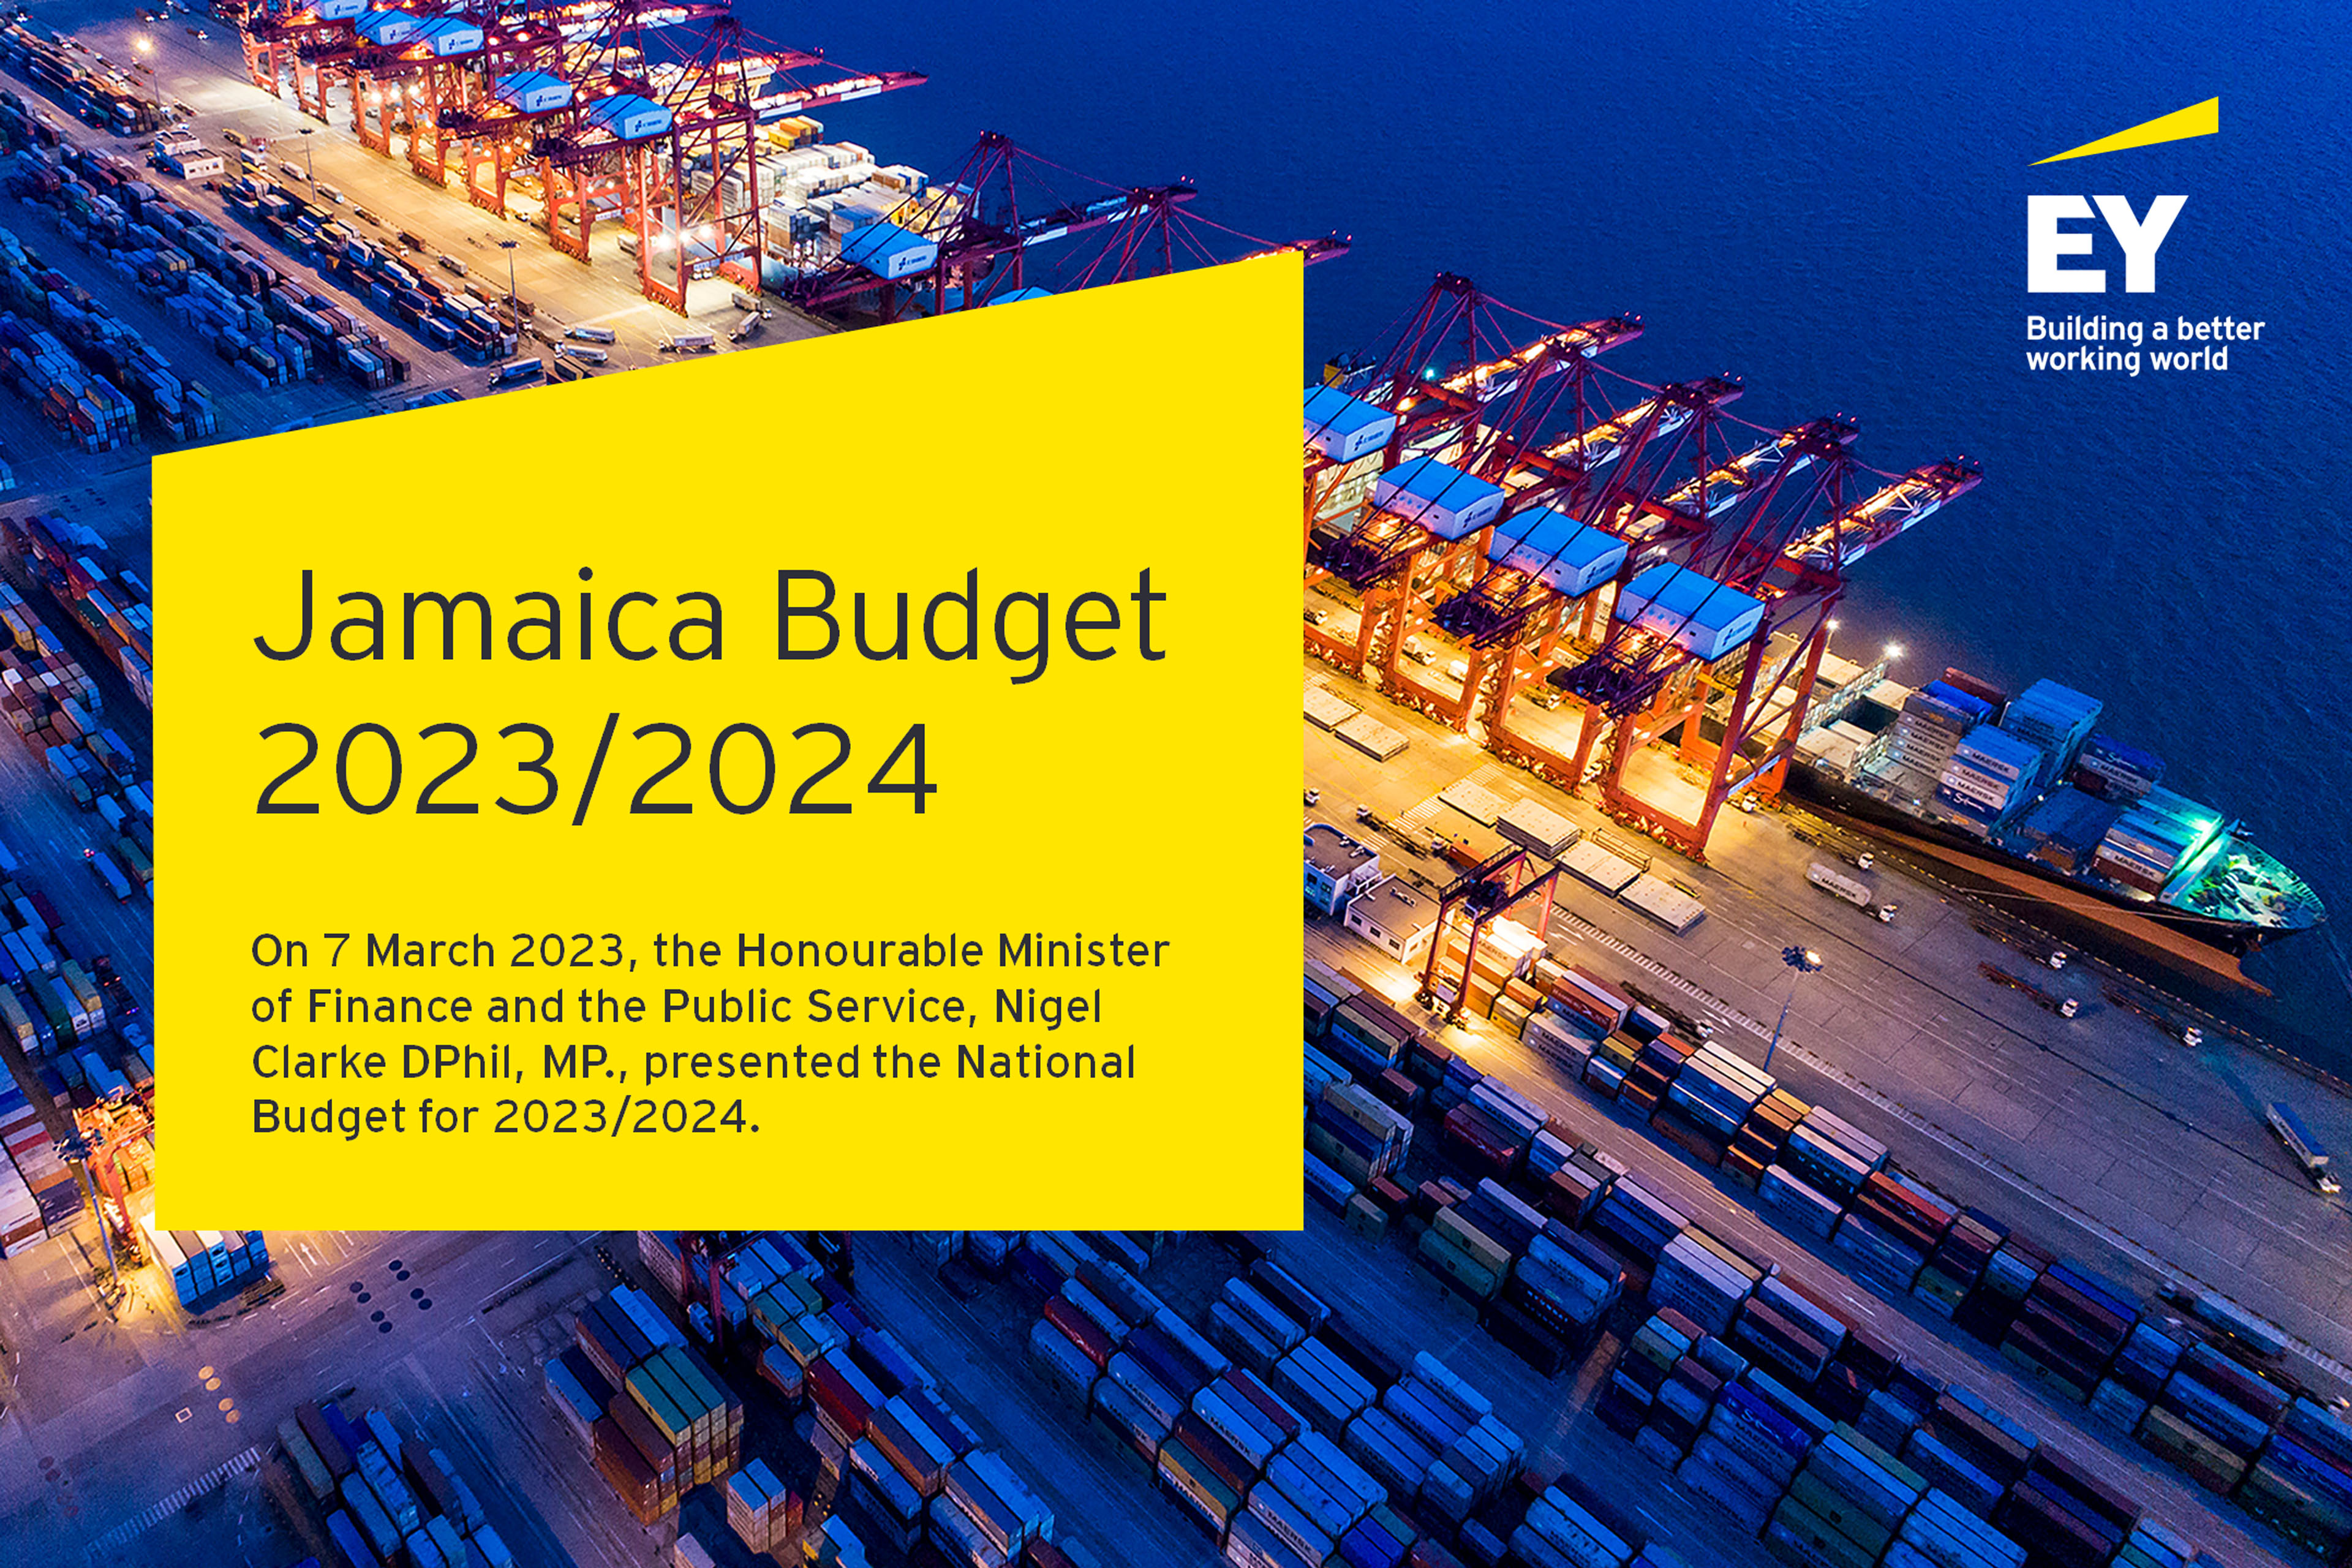 ey-jm-budget-analysis-2023-2024-graphic-10032023